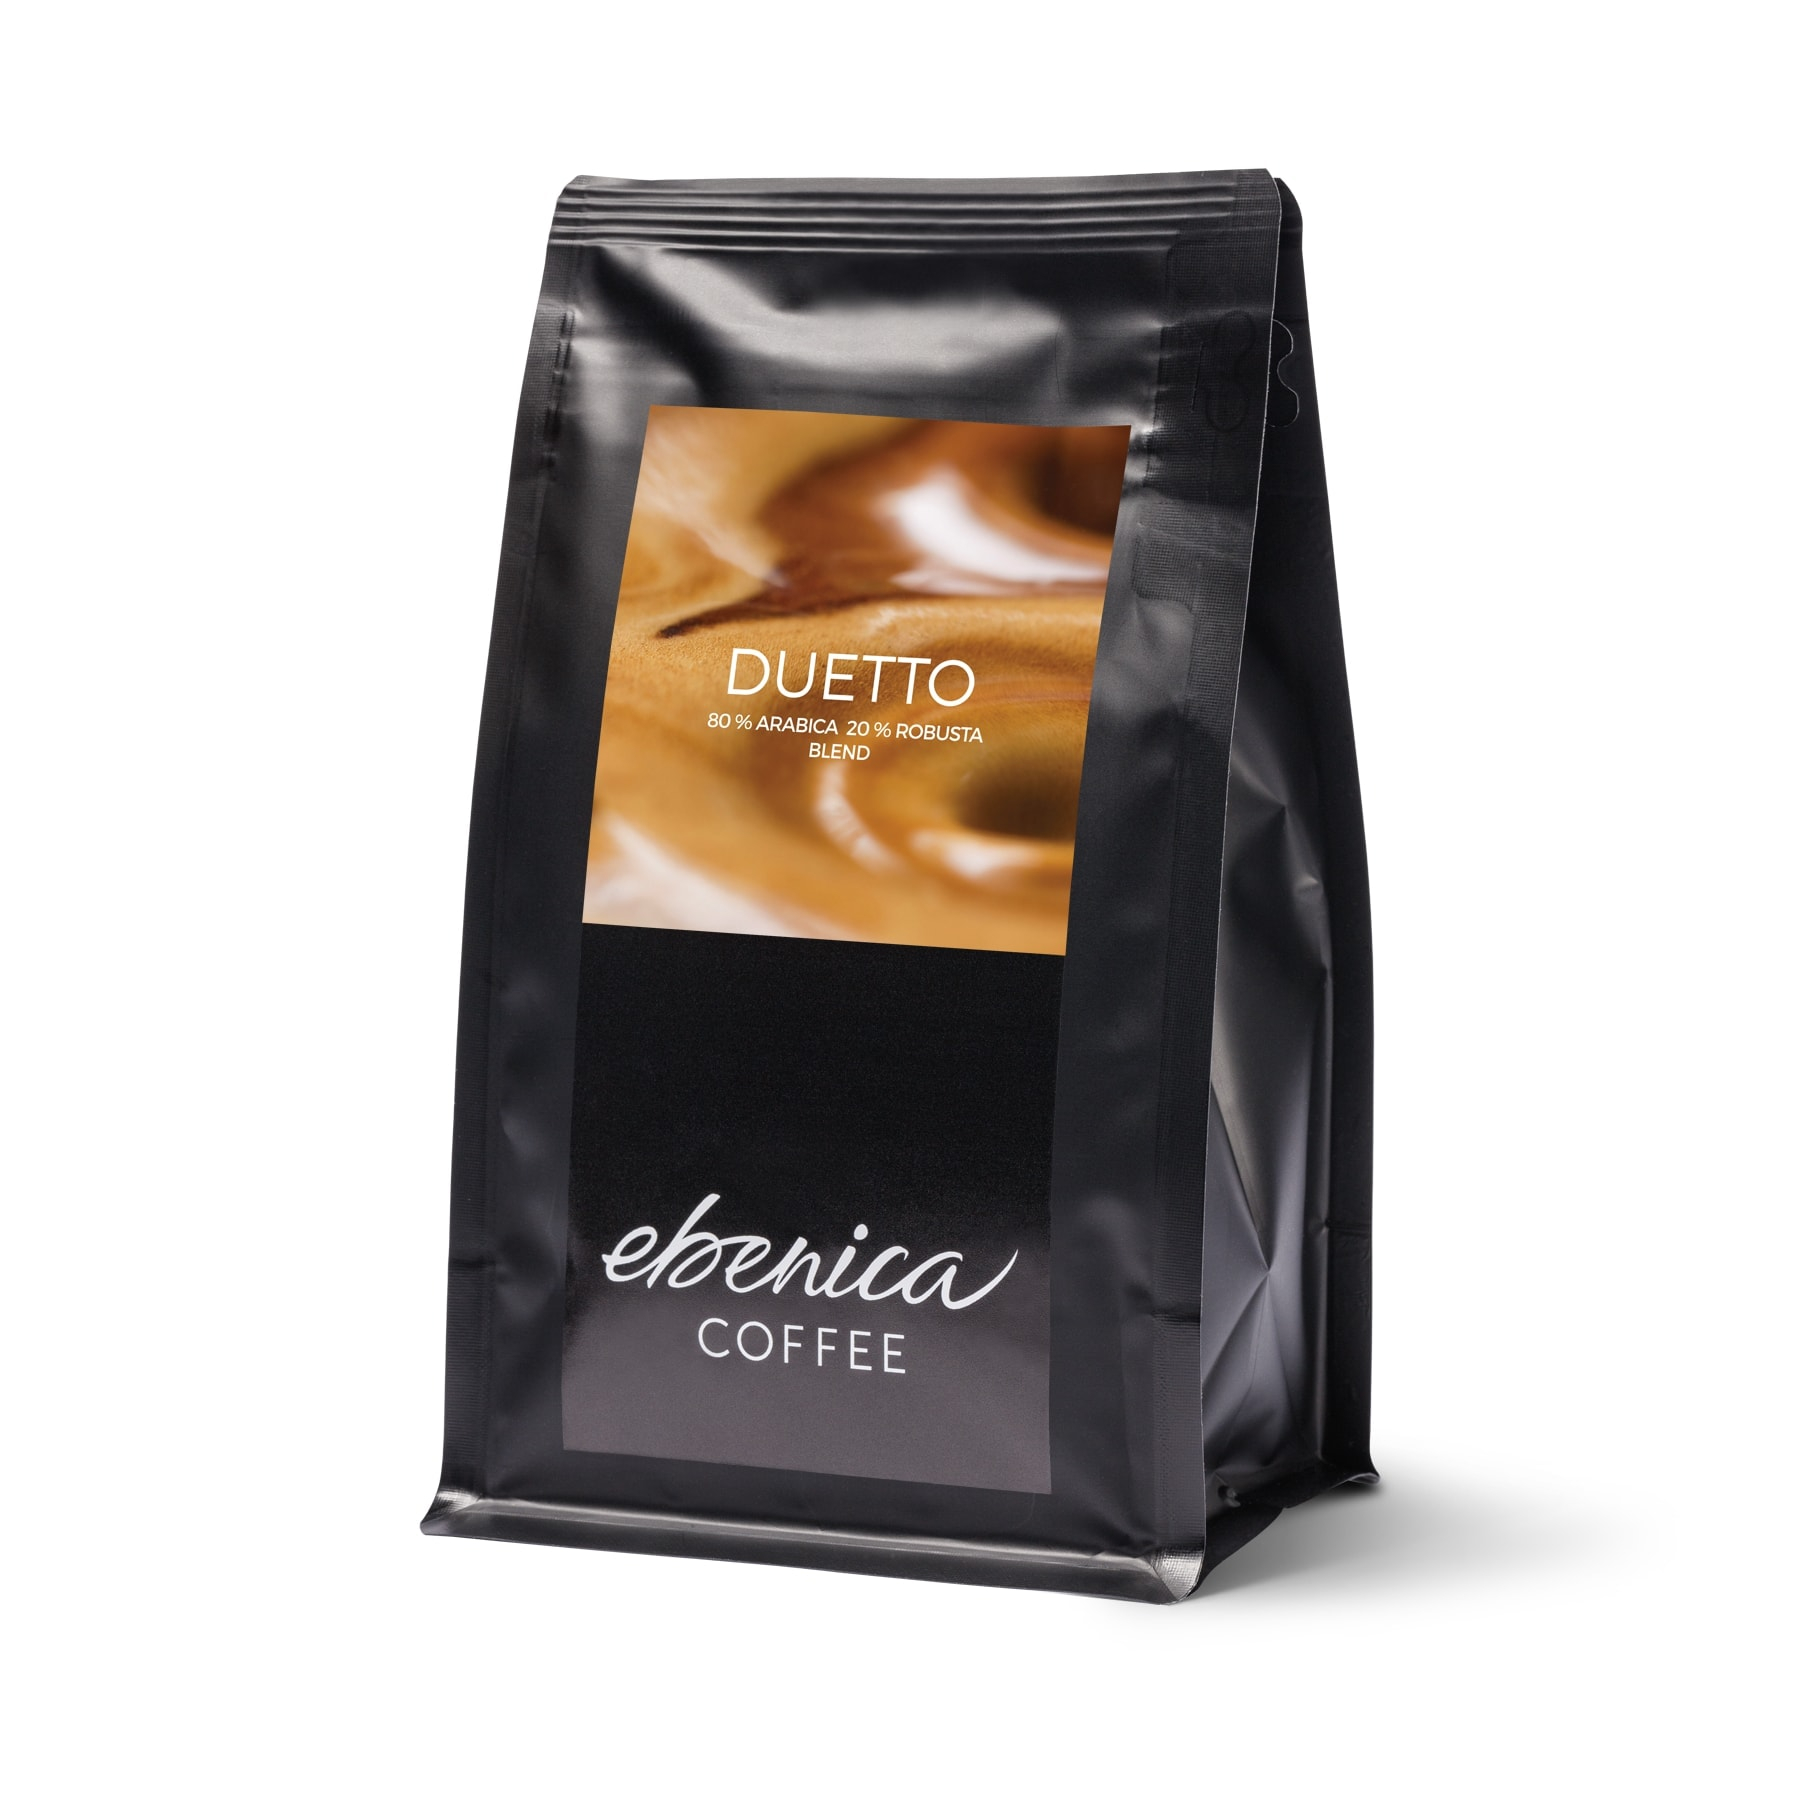 Gemahlener Kaffee Ebenica Duetto - 220g - in dekorativer Verpackung